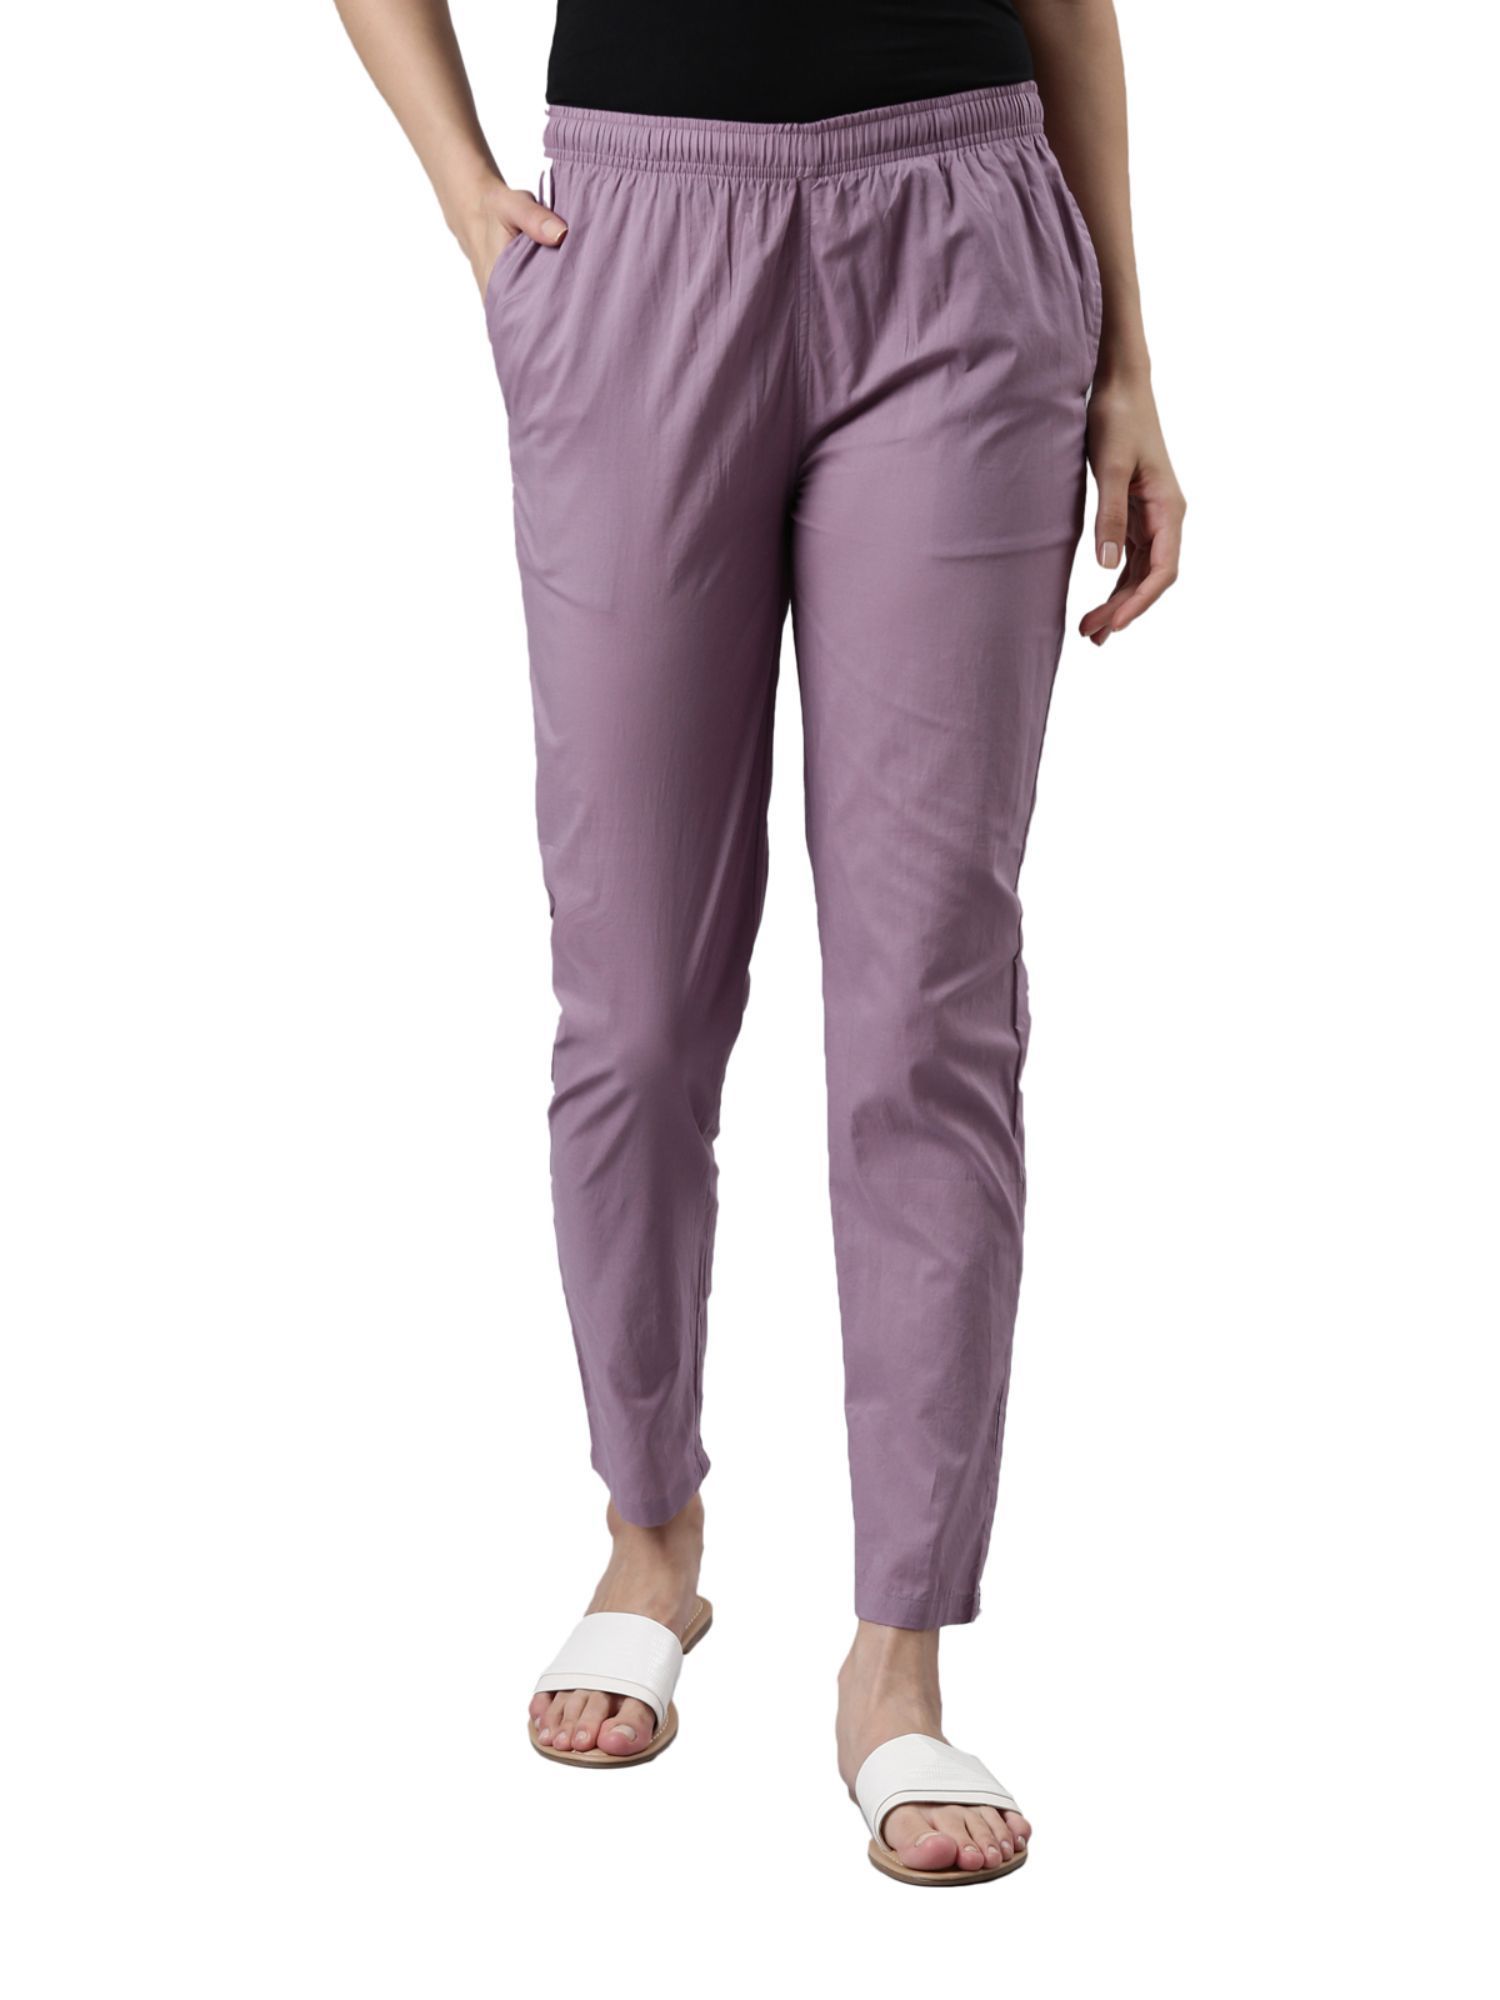 How to Wear Purple Jeans: 15 Stylish & Feminine Outfit Ideas - FMag.com